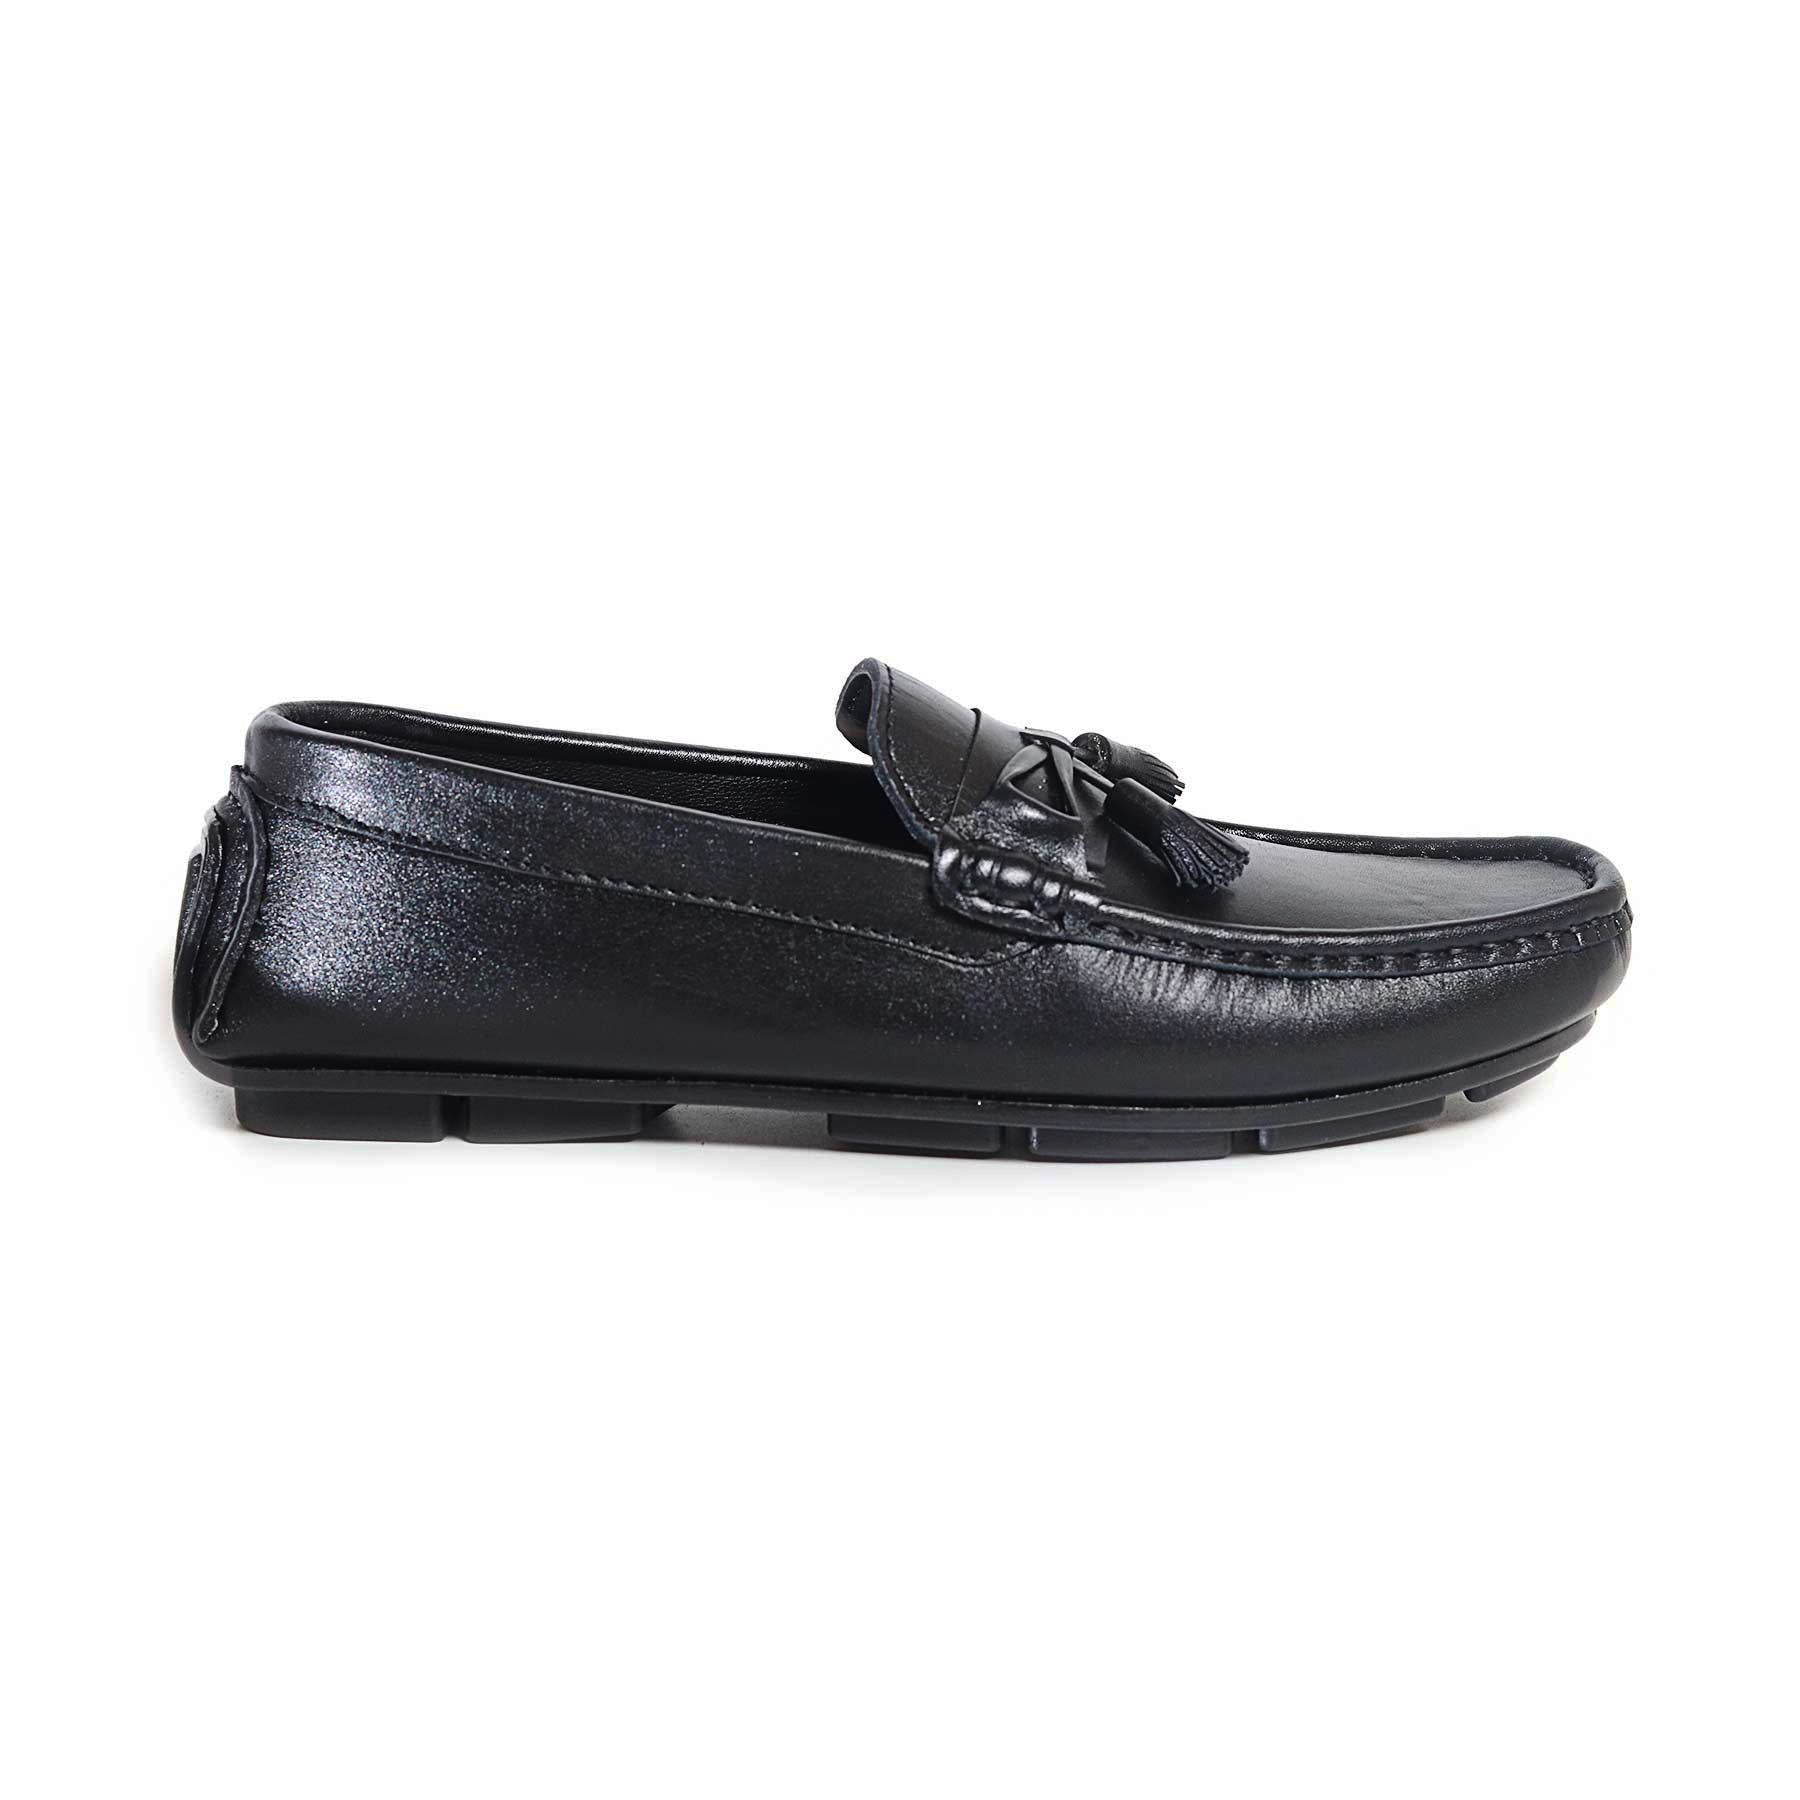 Zays Leather Trendy Loafer For Men (Black)- SF73